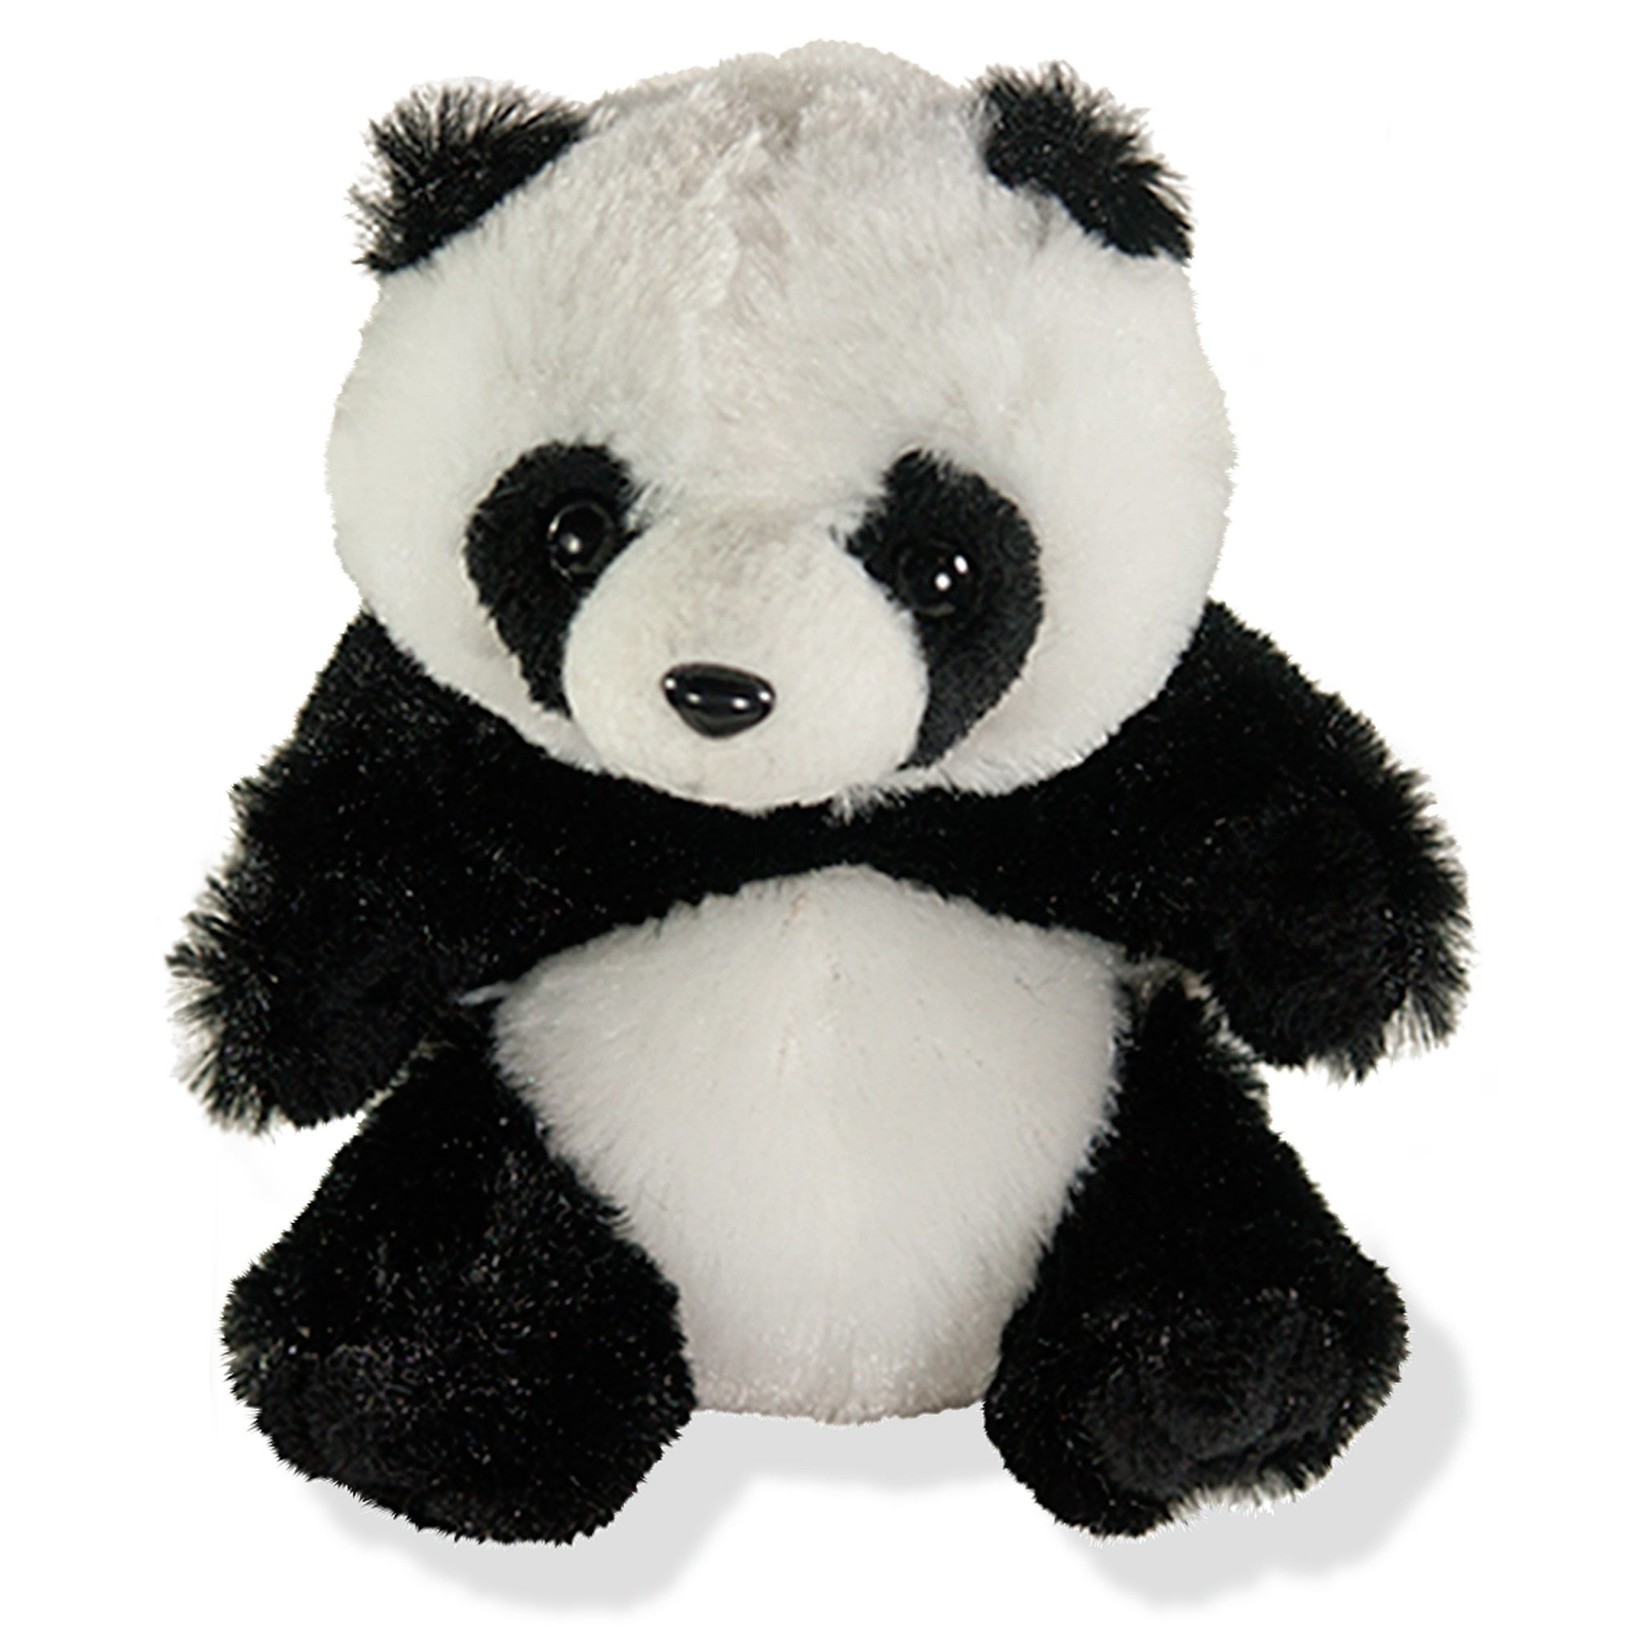 Peter Pauper Press Hug a Panda Kit